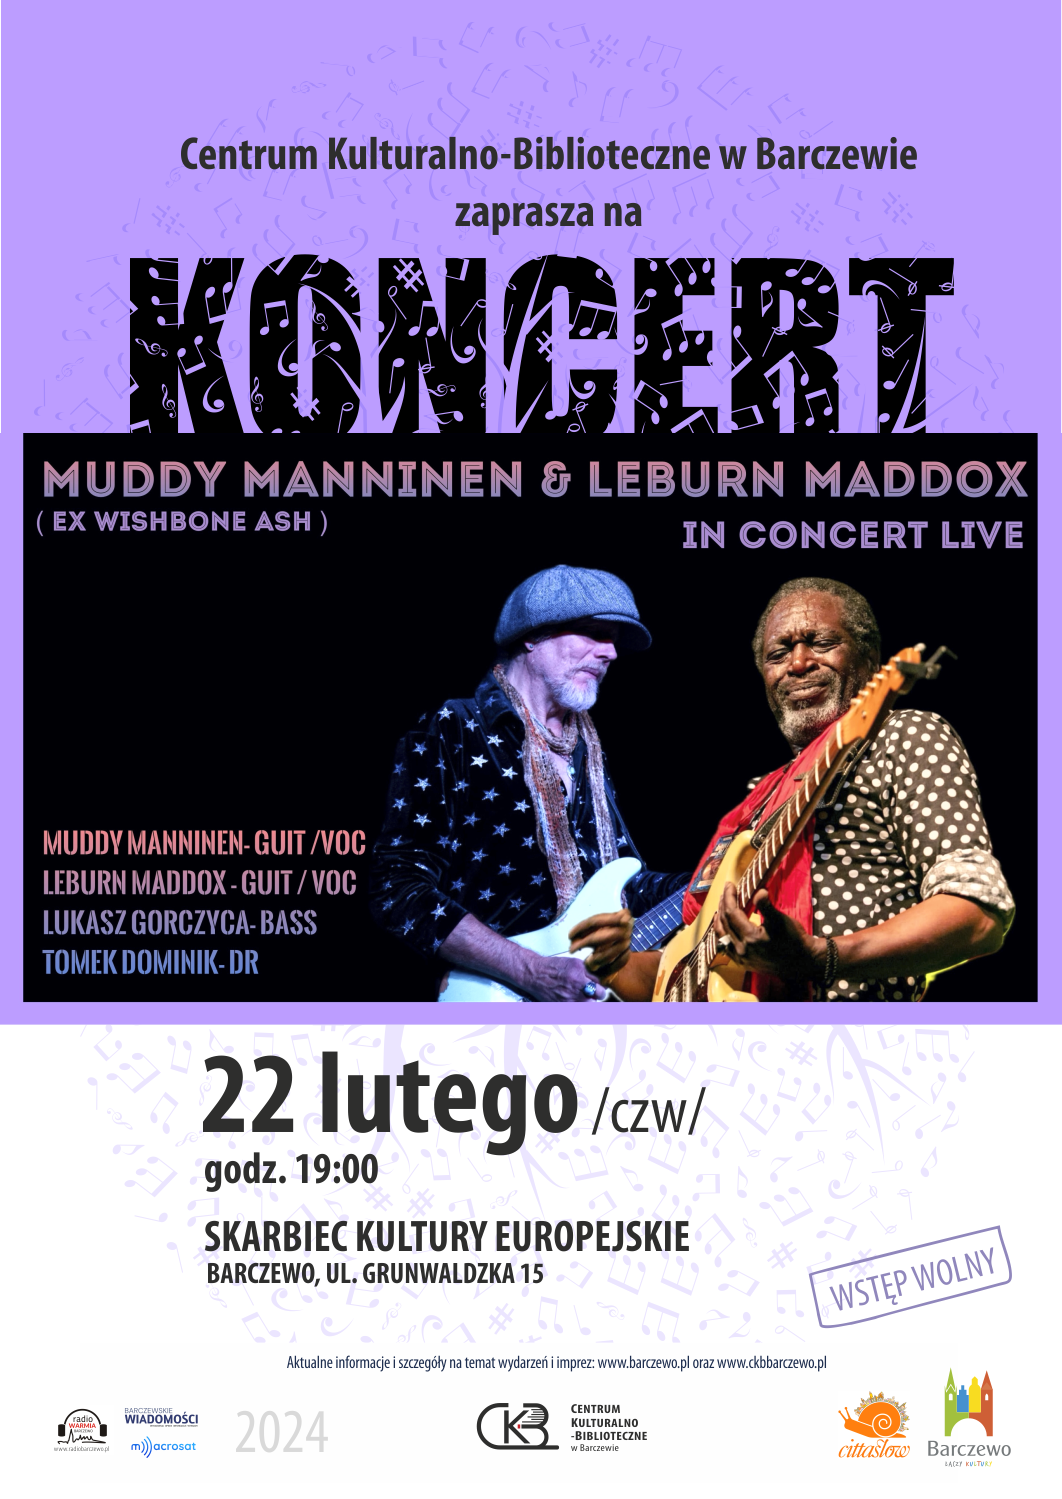 MUDDY MANNINEN & LEBURN MADDOX – Koncert